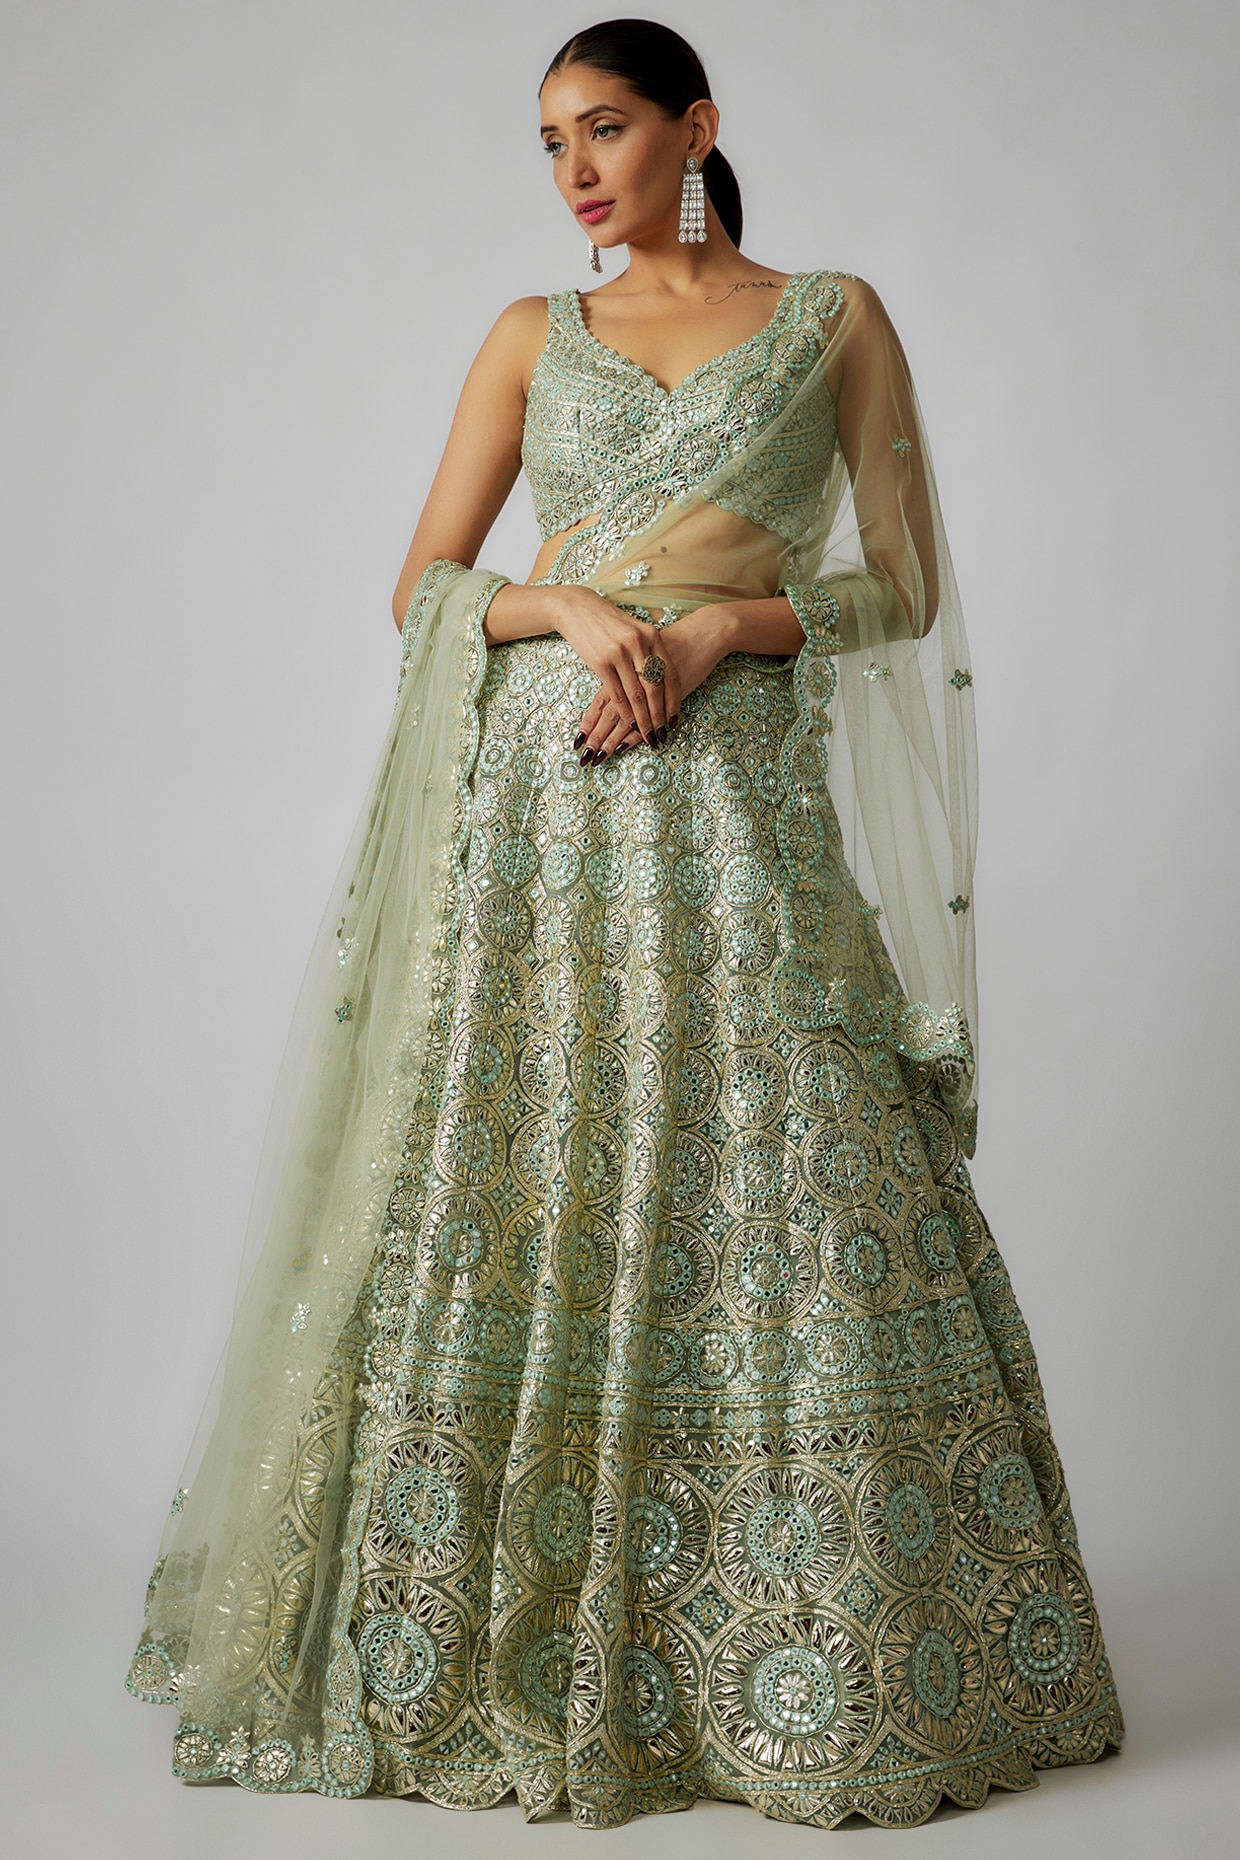 Net Light Green Lehenga Choli Pakistani Wedding Dress – Nameera by Farooq